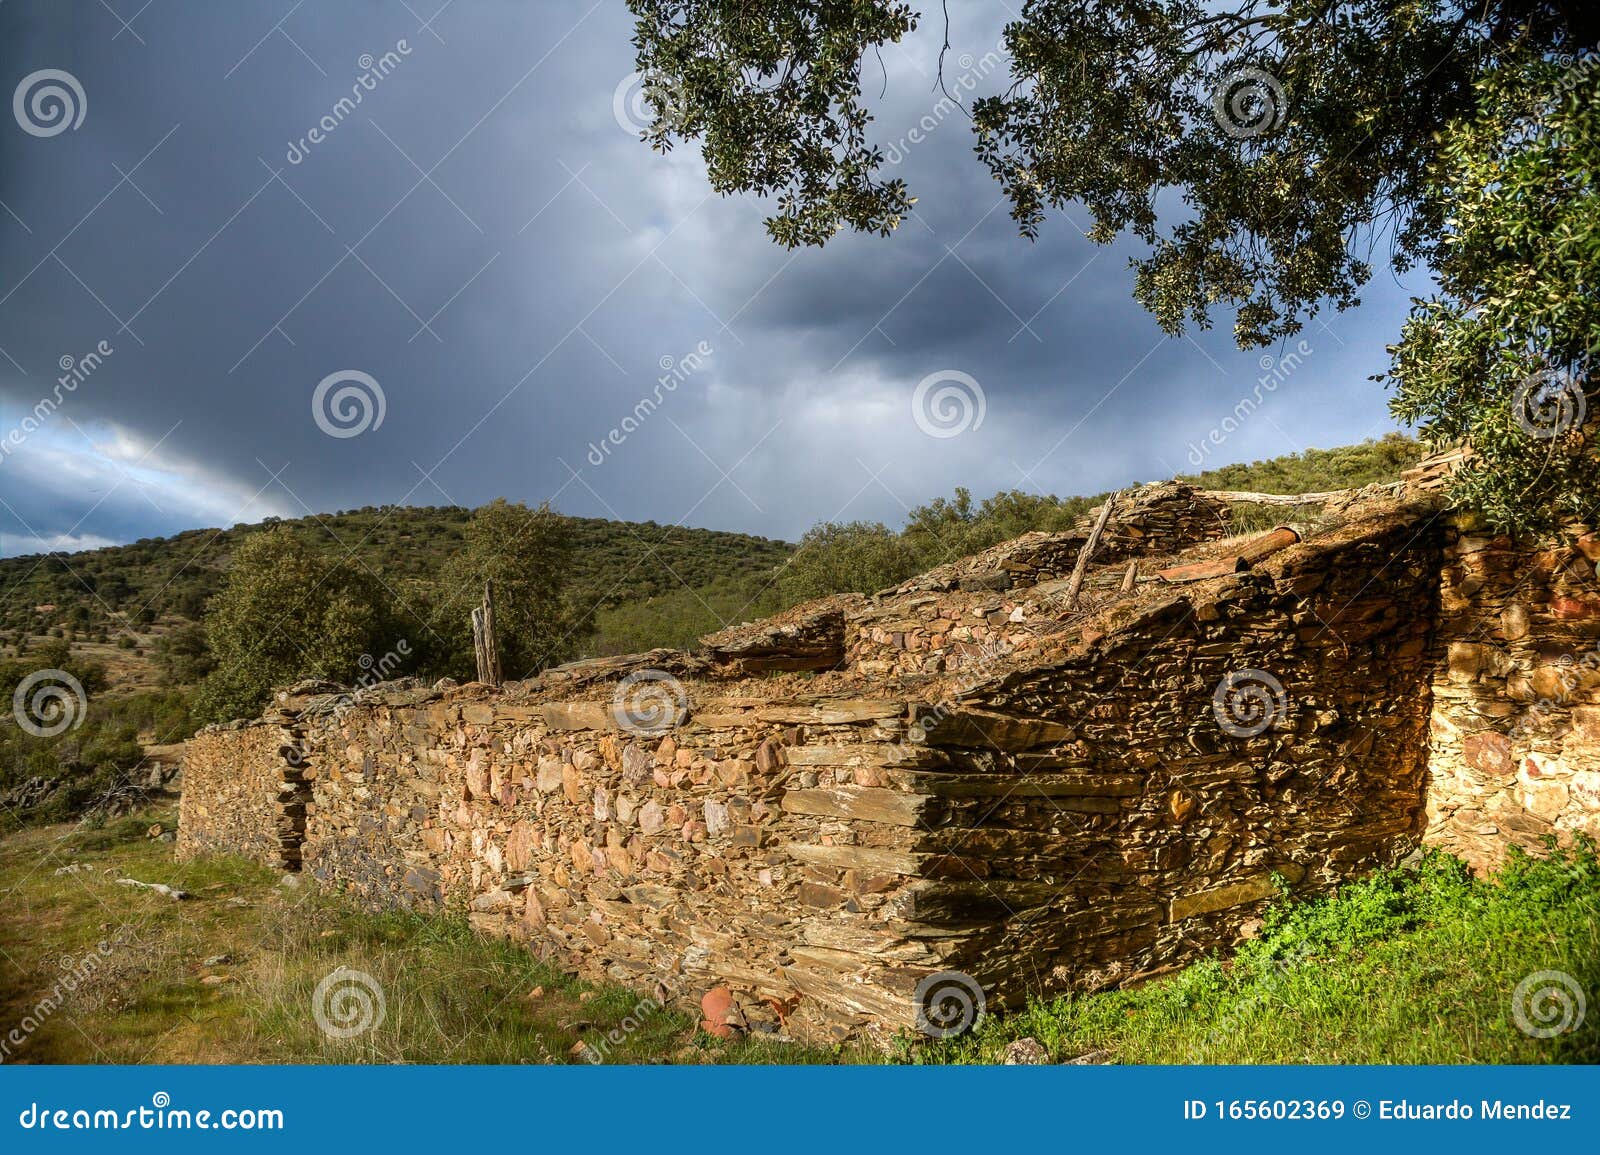 landscape in the montes de toledo, castilla la mancha, spain